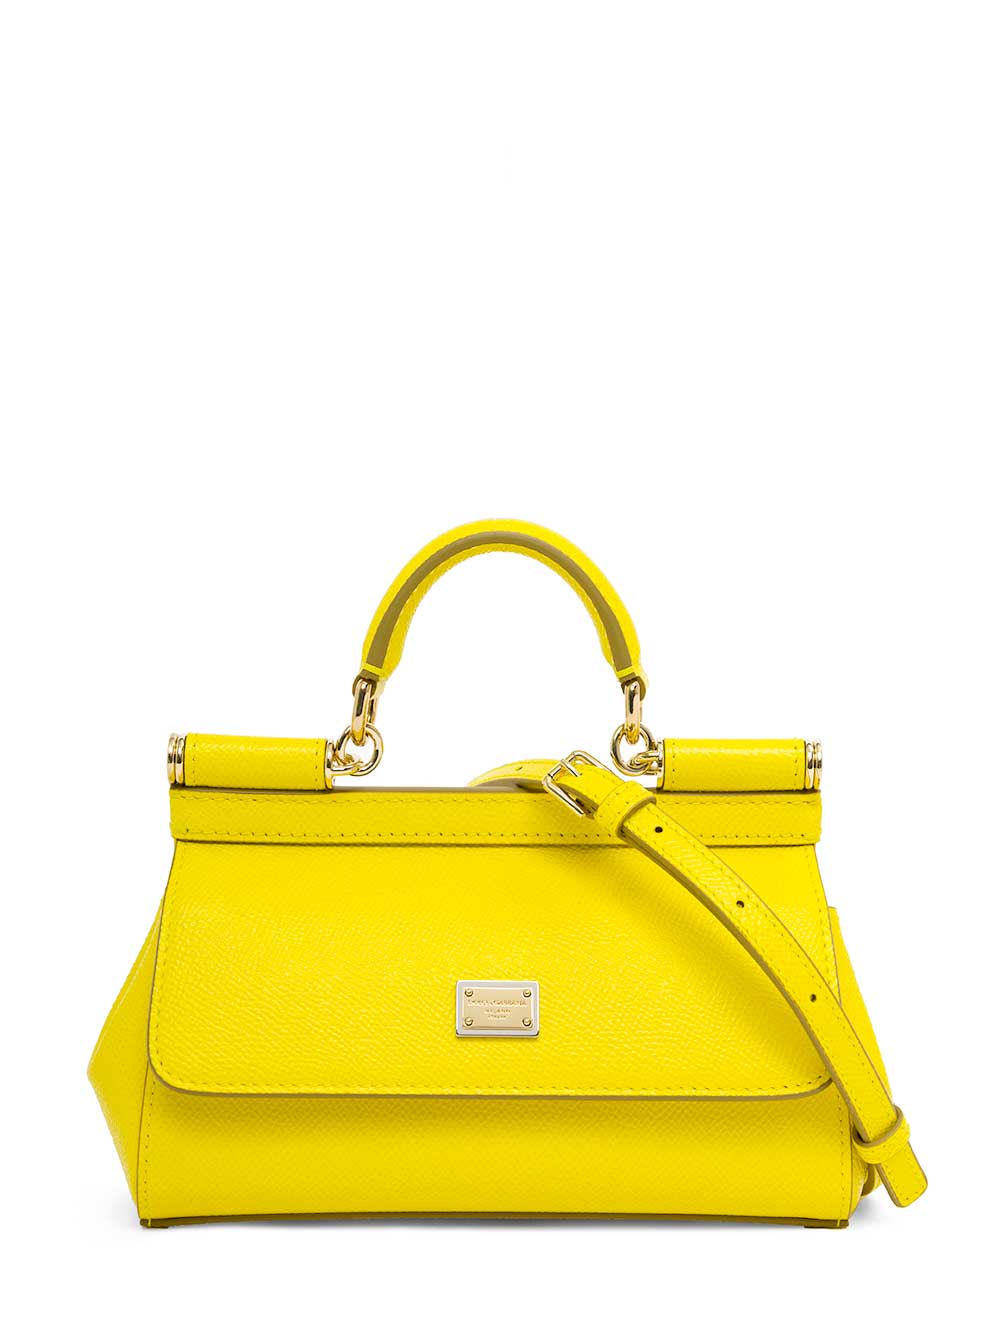 Dolce & Gabbana Sicily Mini Yellow Leather Handbag